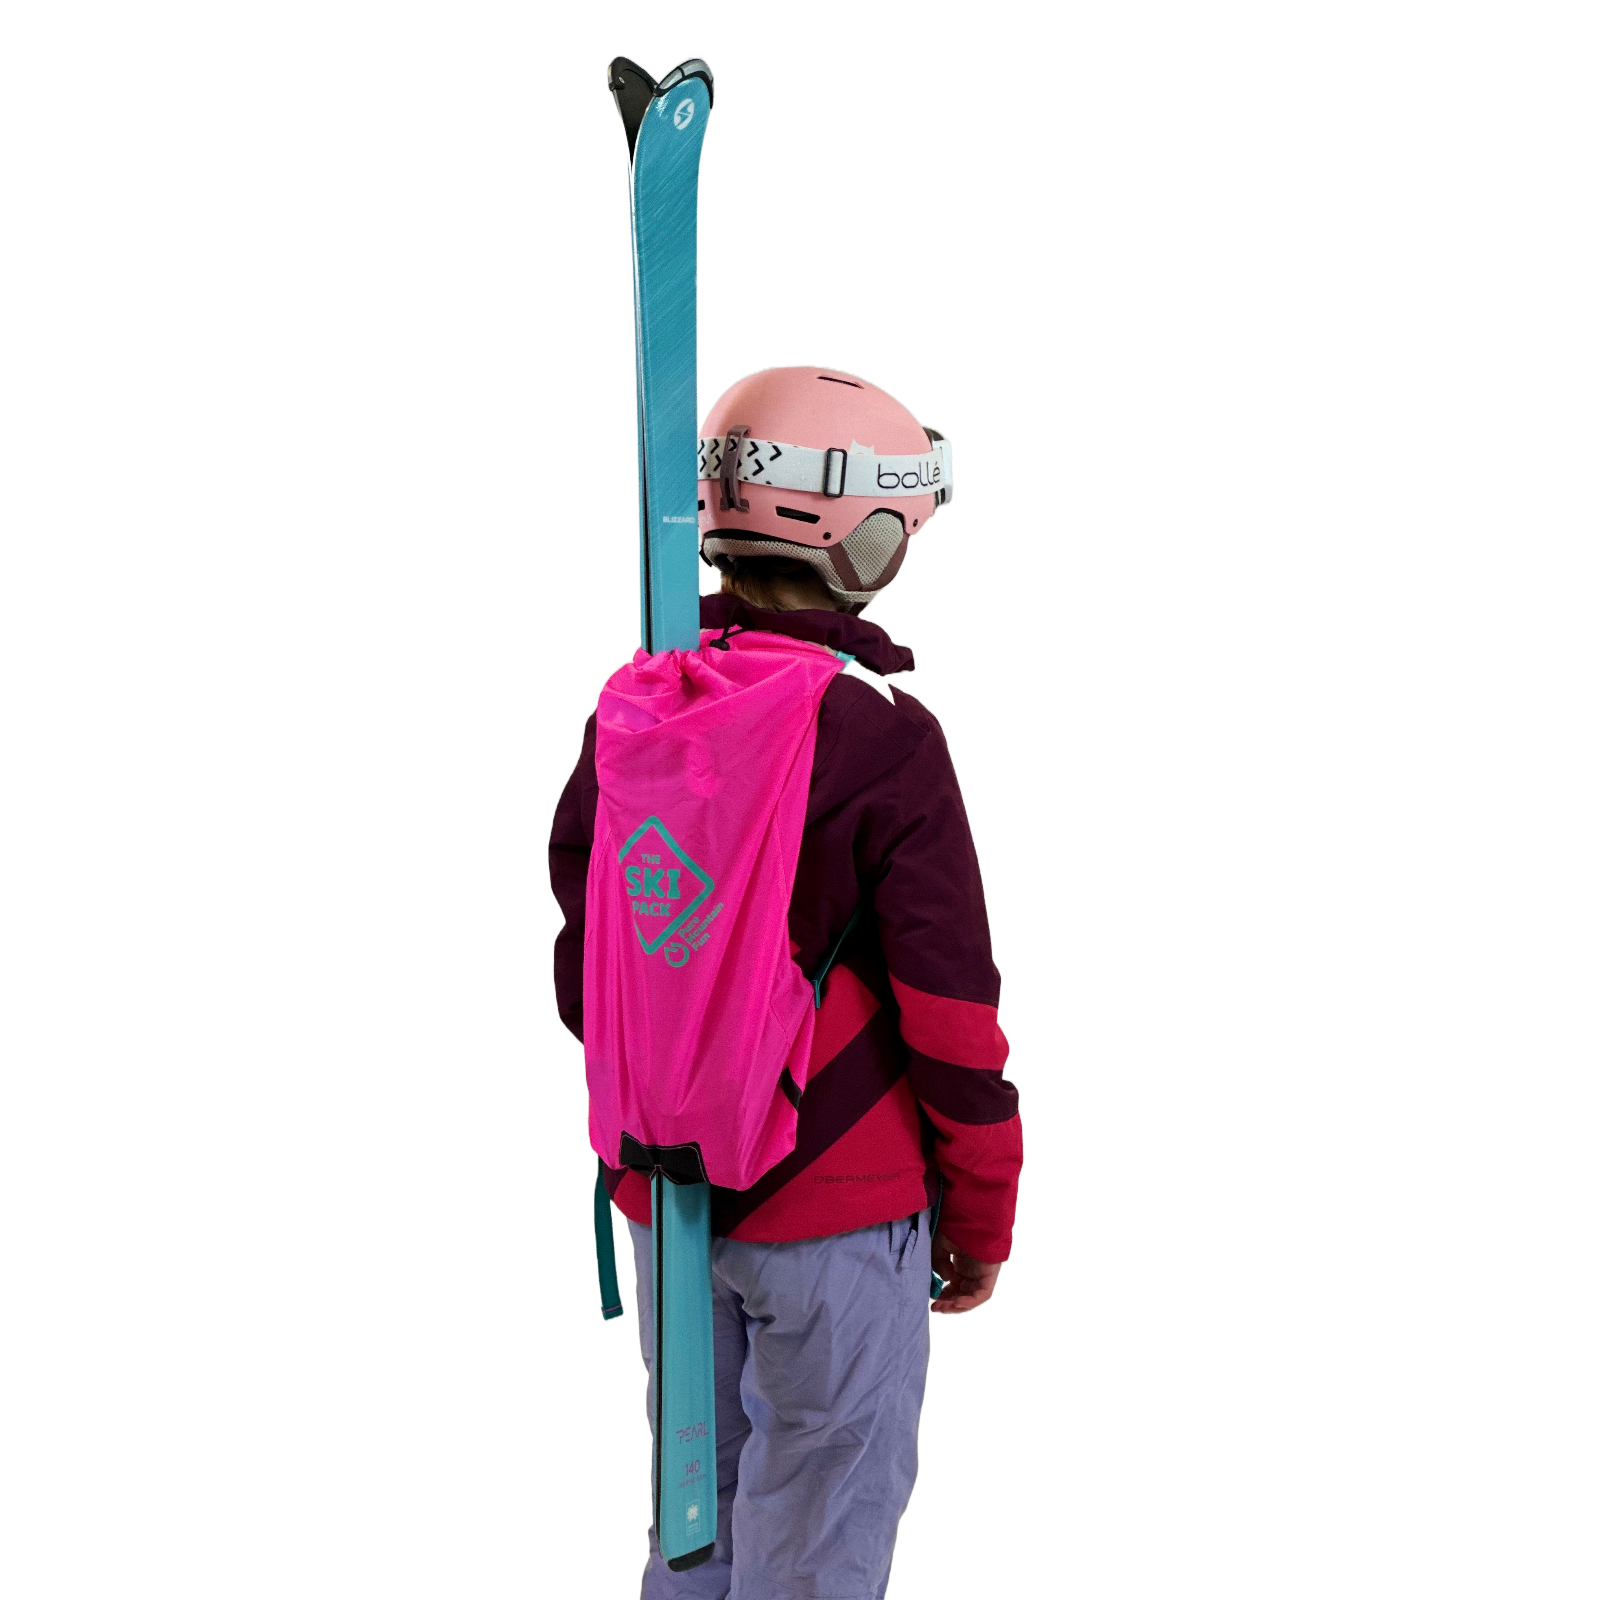 Adult ski pack in pink